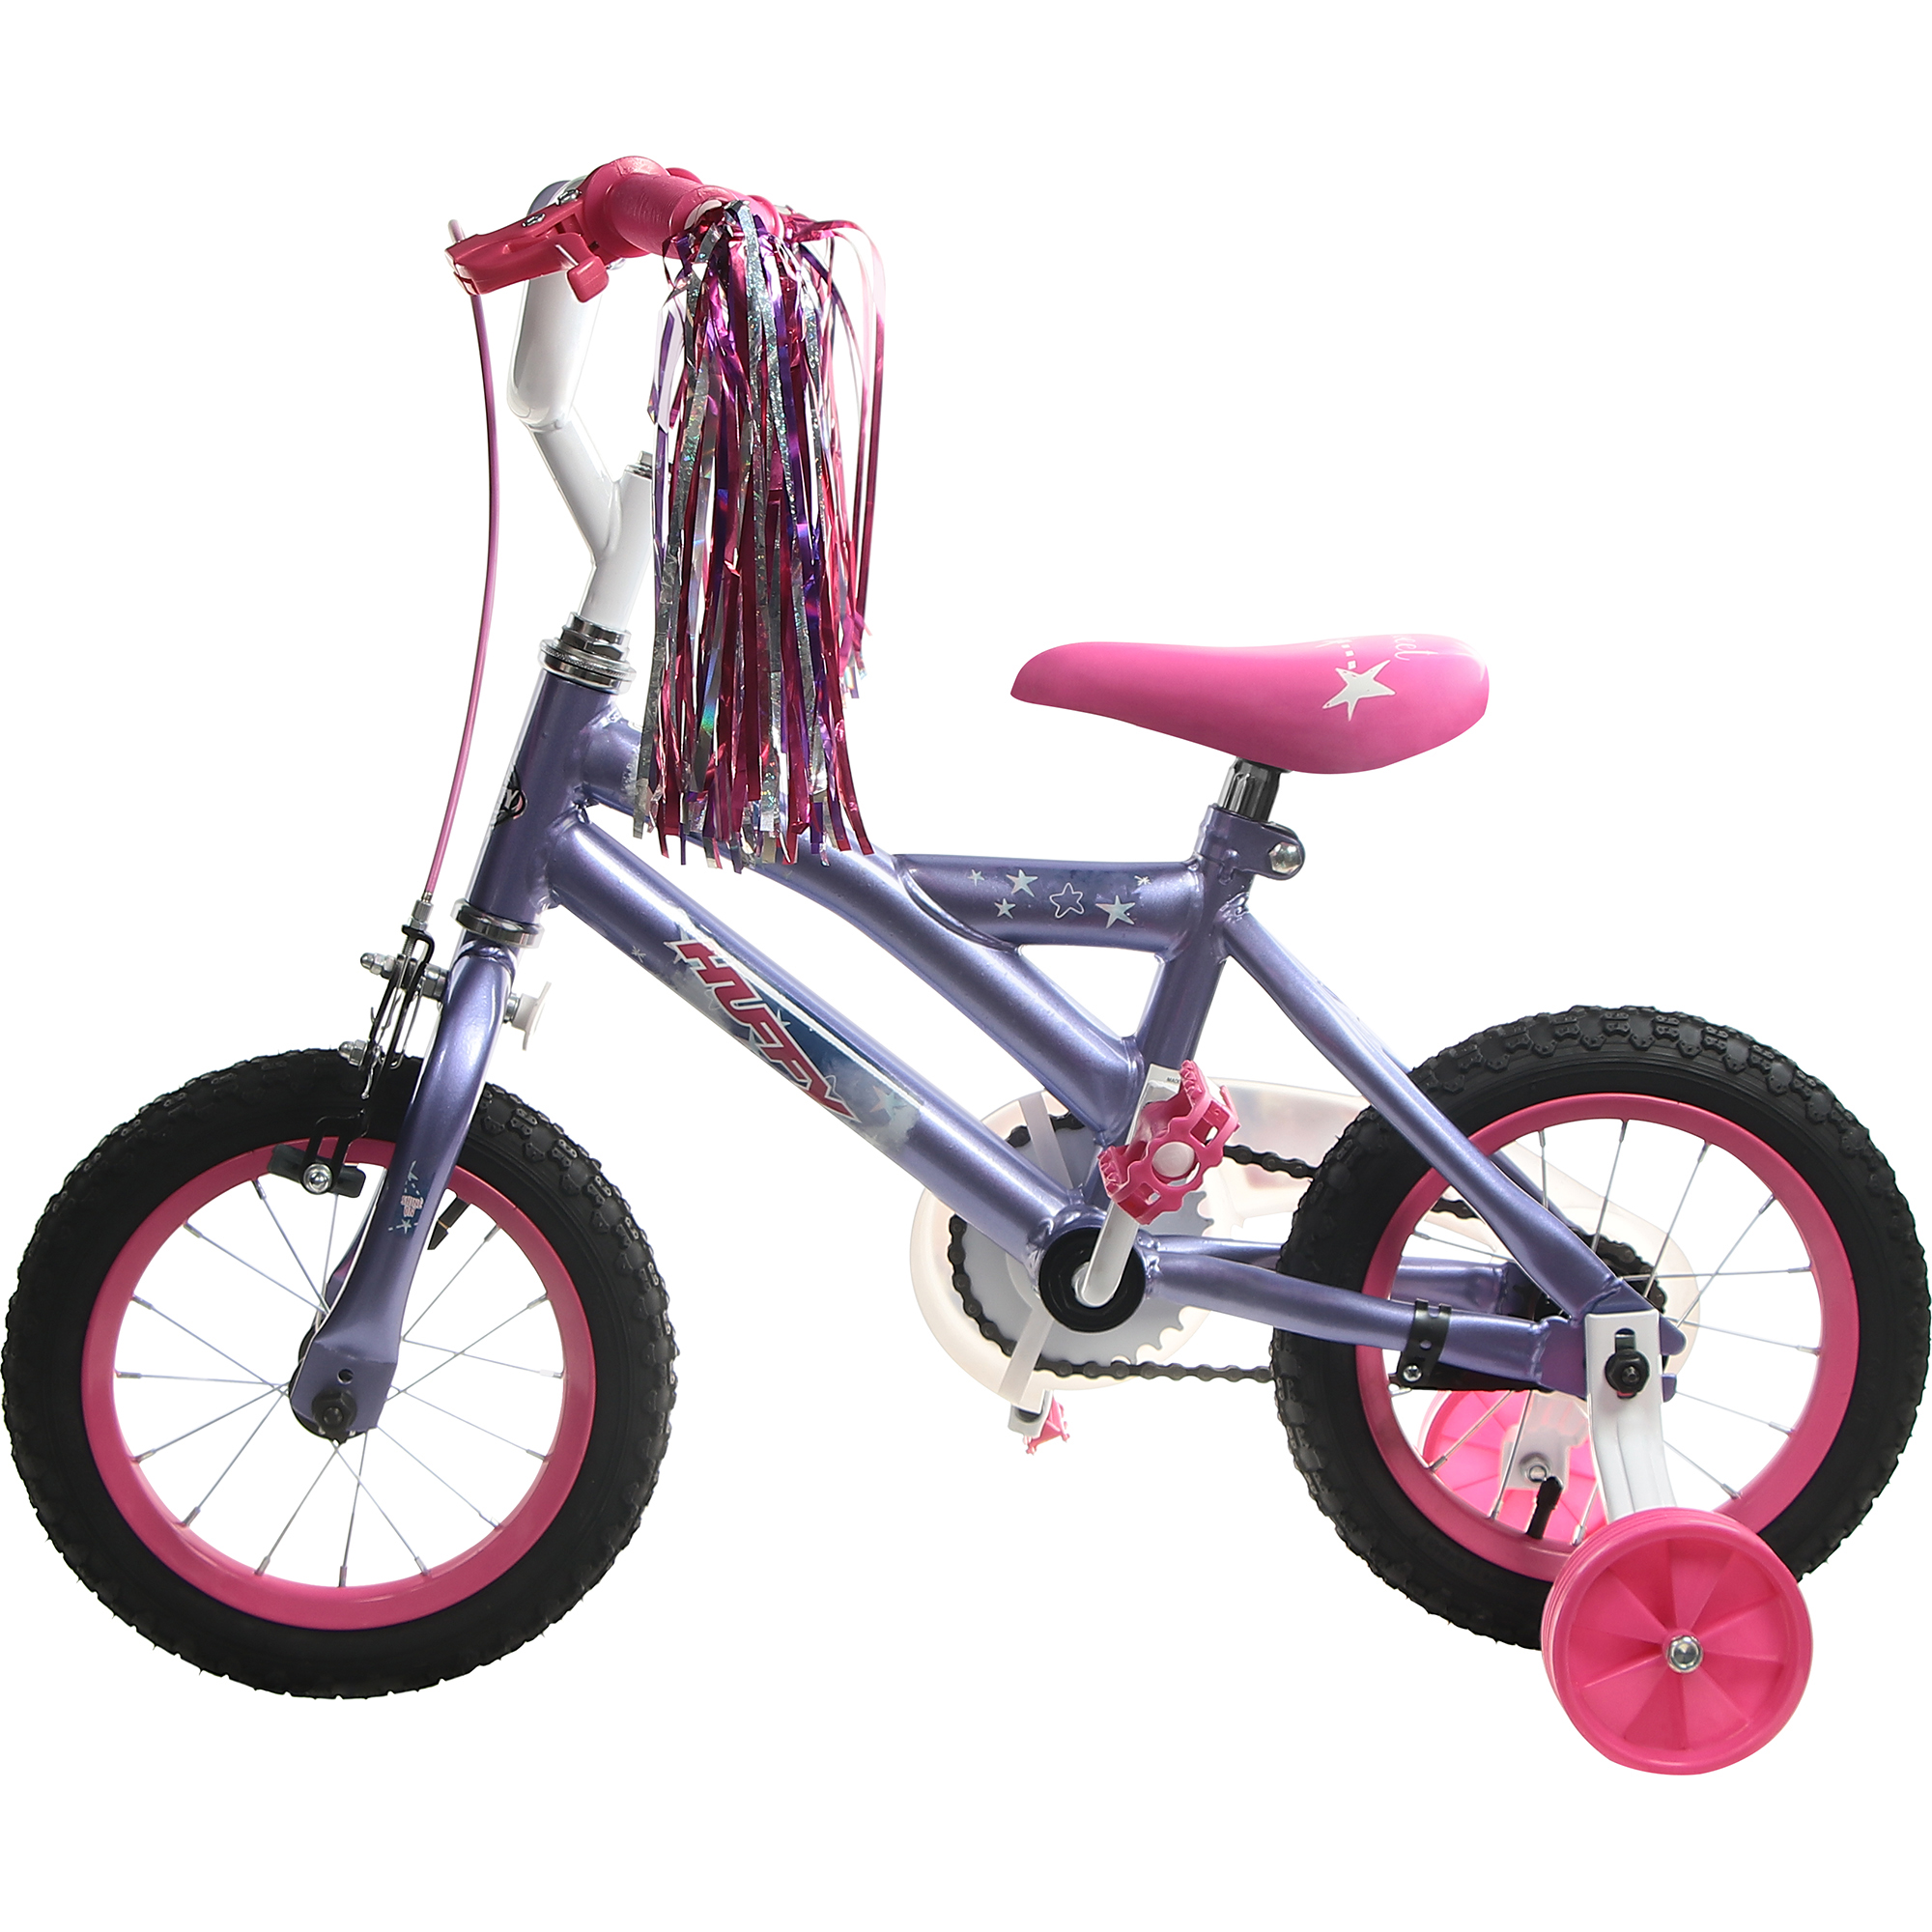 Велосипед детский Huffy So sweet, 12, для девочек велосипед детский huffy so sweet 16 для девочек